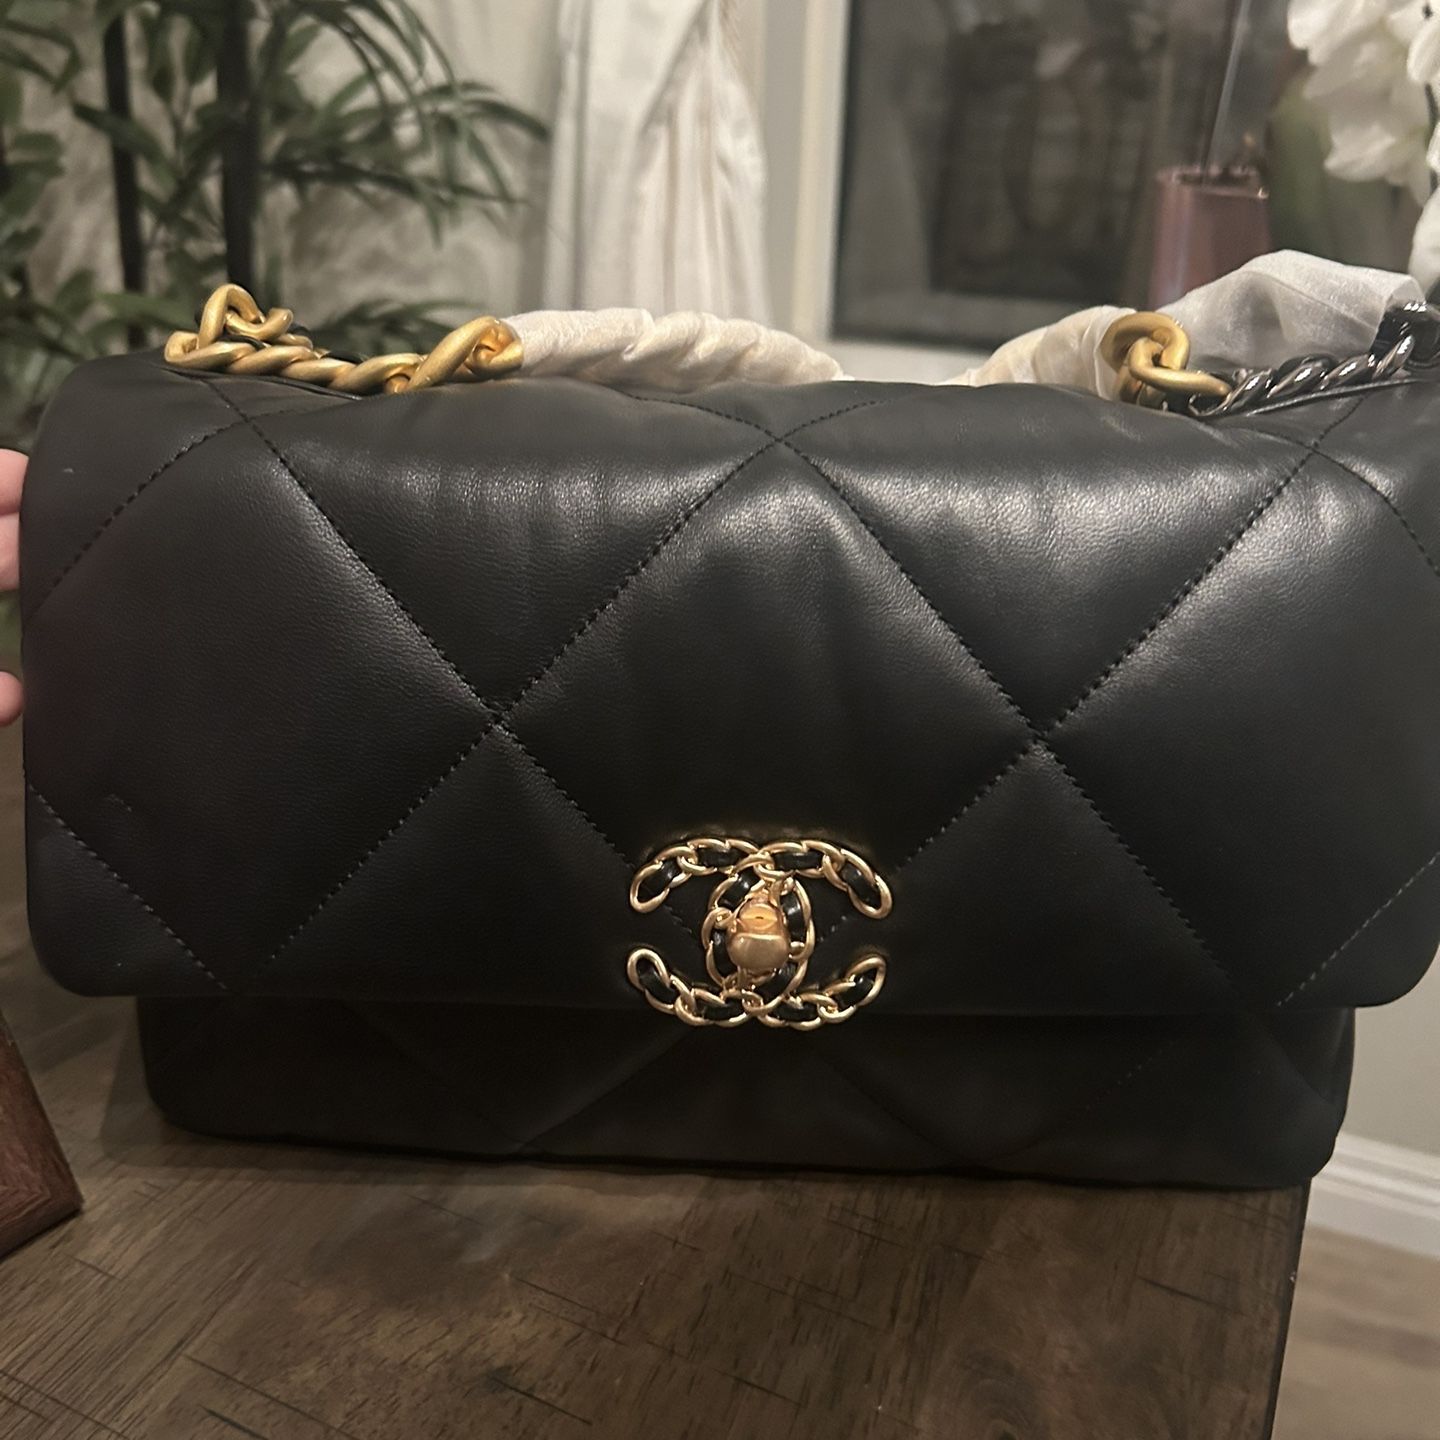  Chanel Handbag